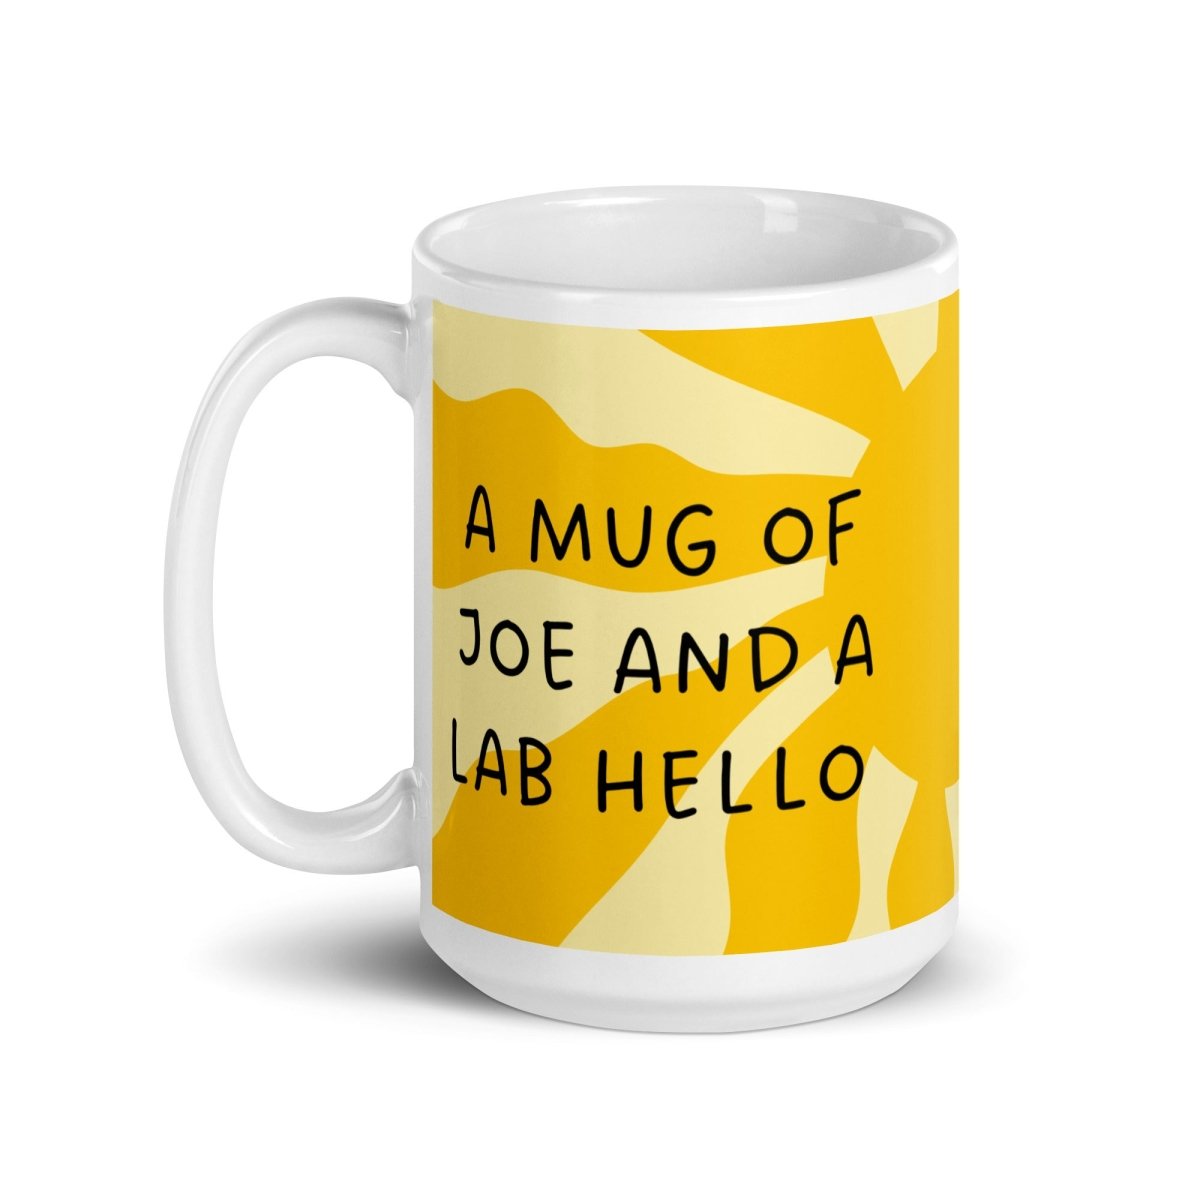 Lab Hello Mug - Funny Nikko